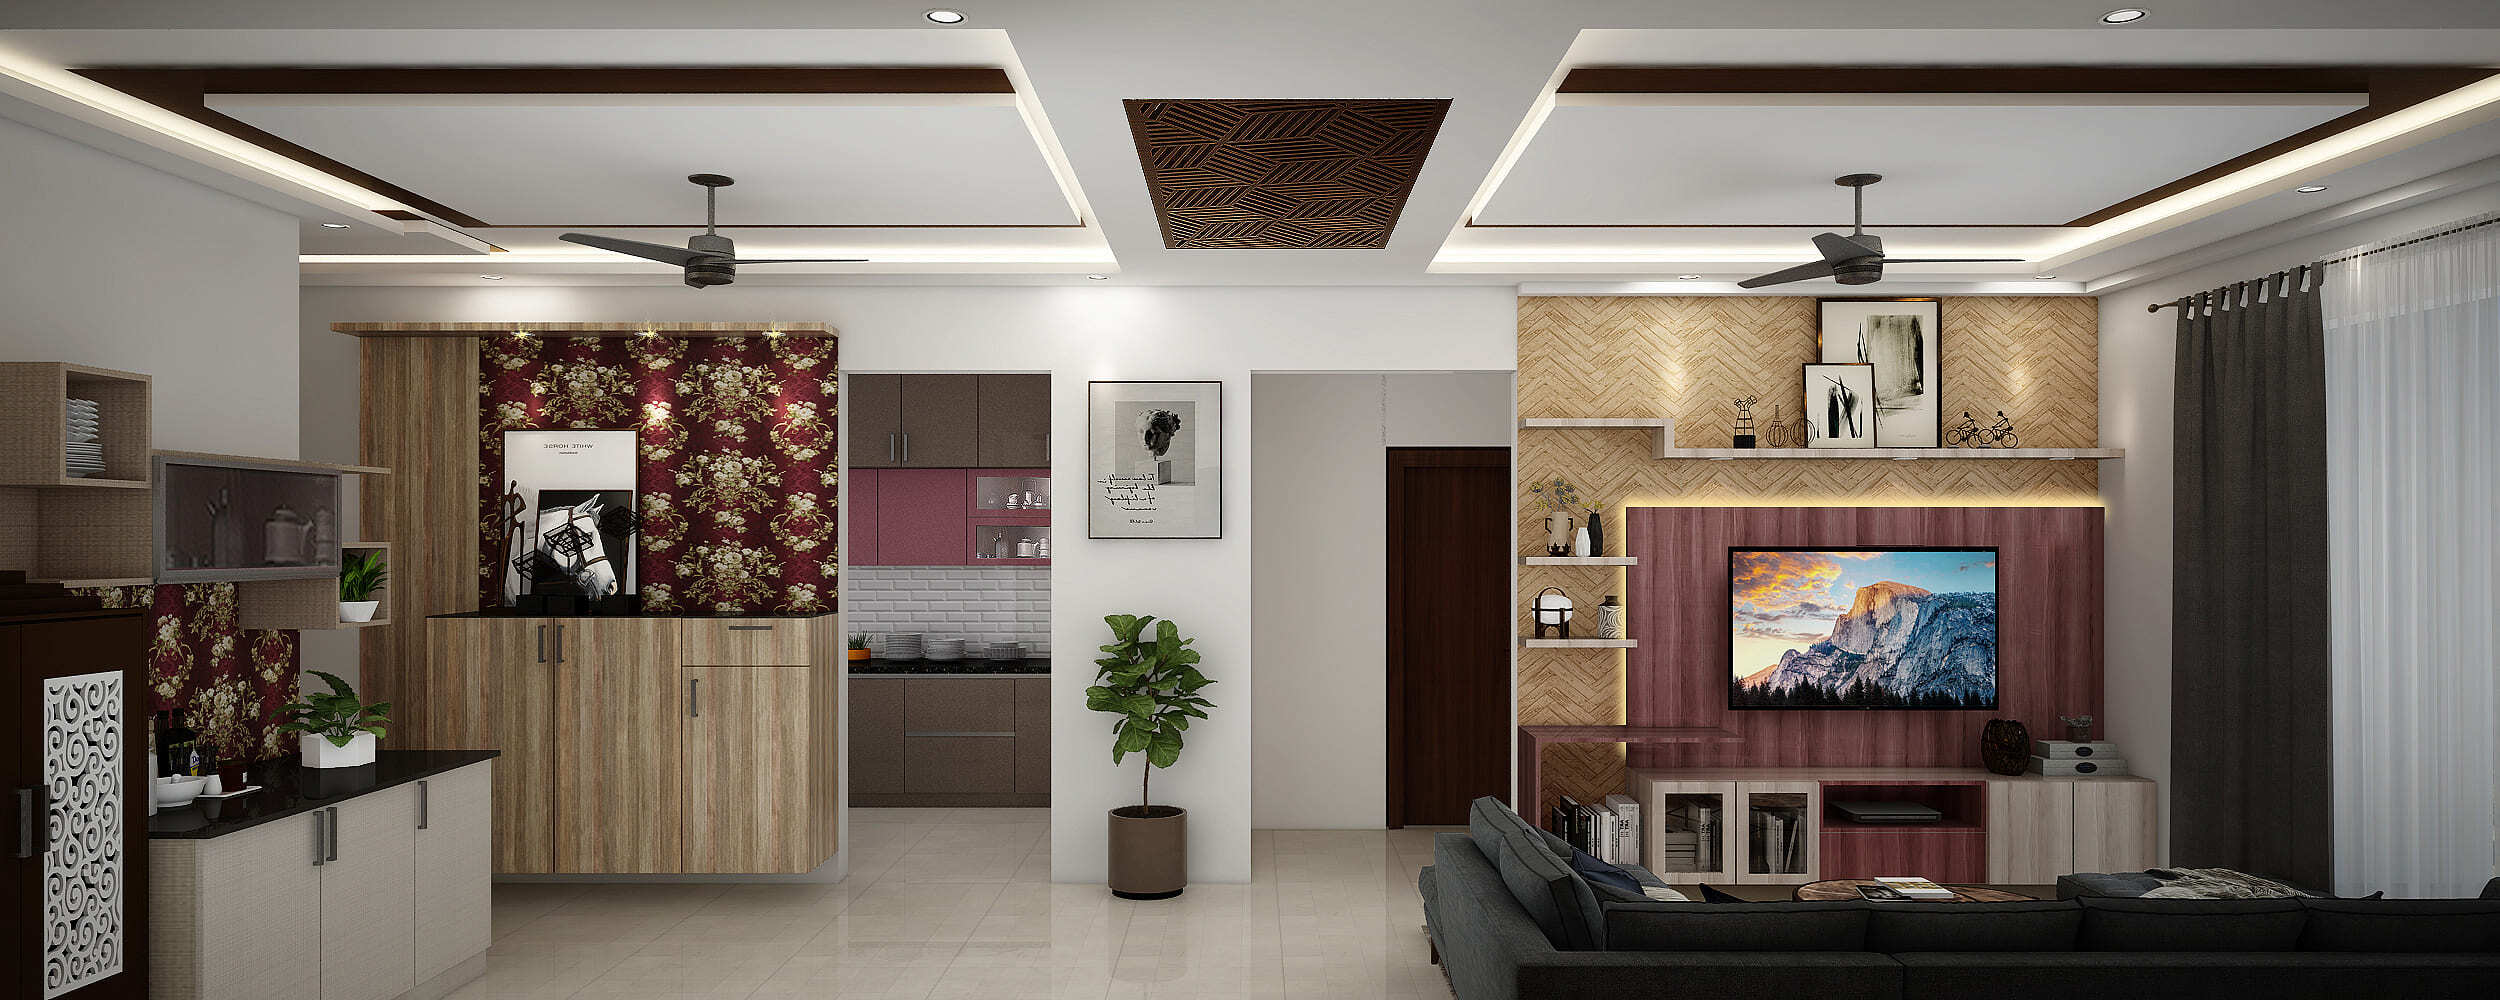 Living Room Interior Design Styles - A Guide - Decorpot Home Interiors